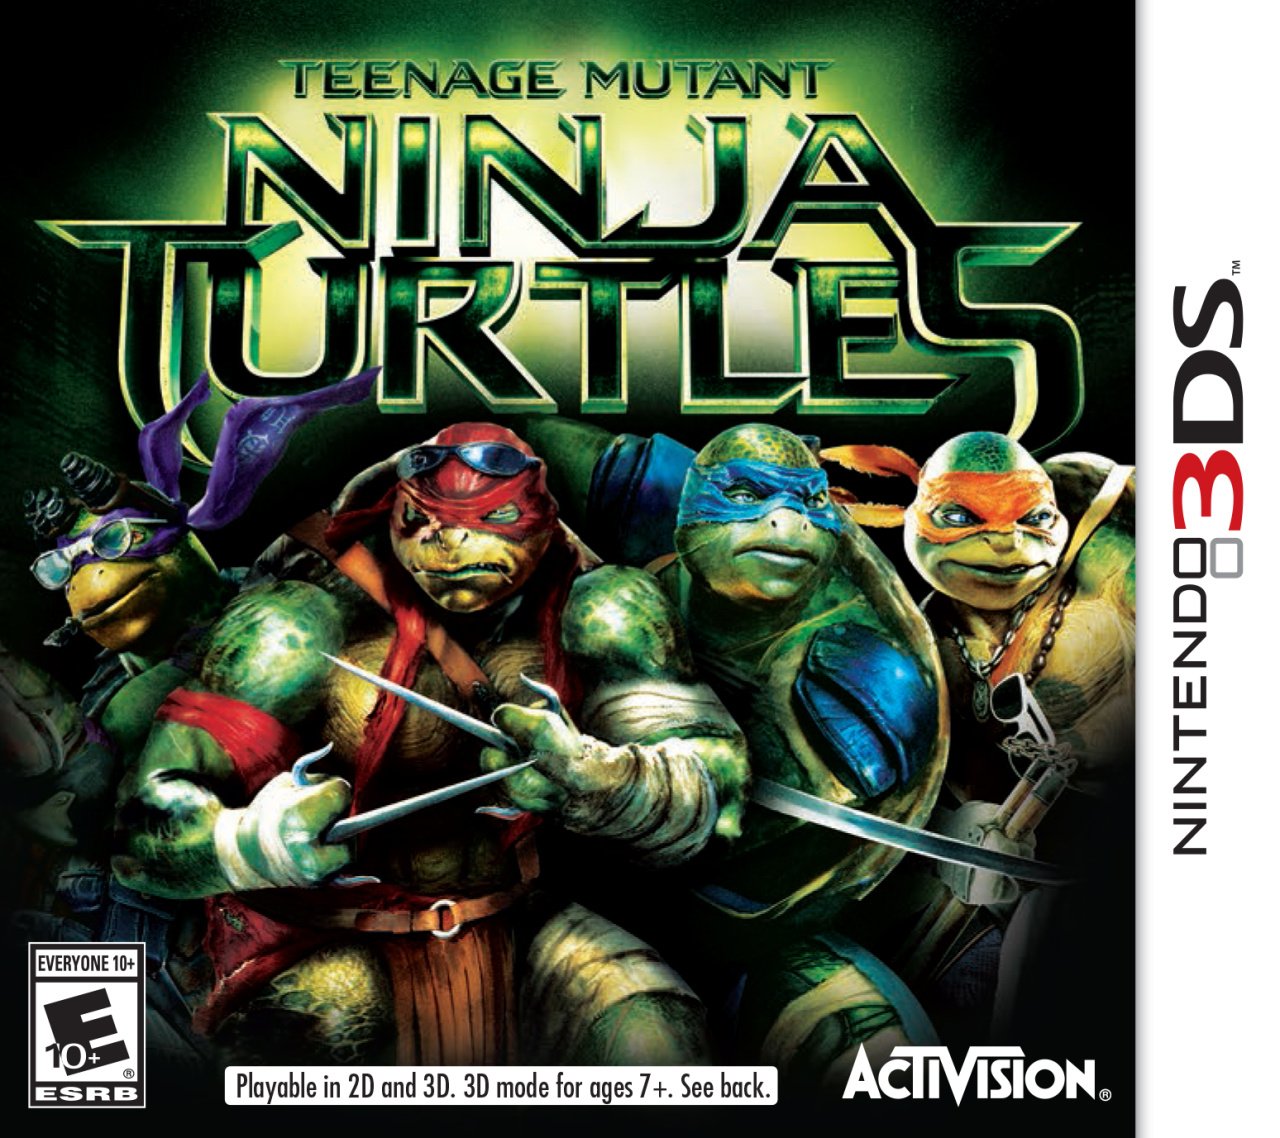 movie-based-teenage-mutant-ninja-turtles-game-coming-to-3ds-nintendo-life